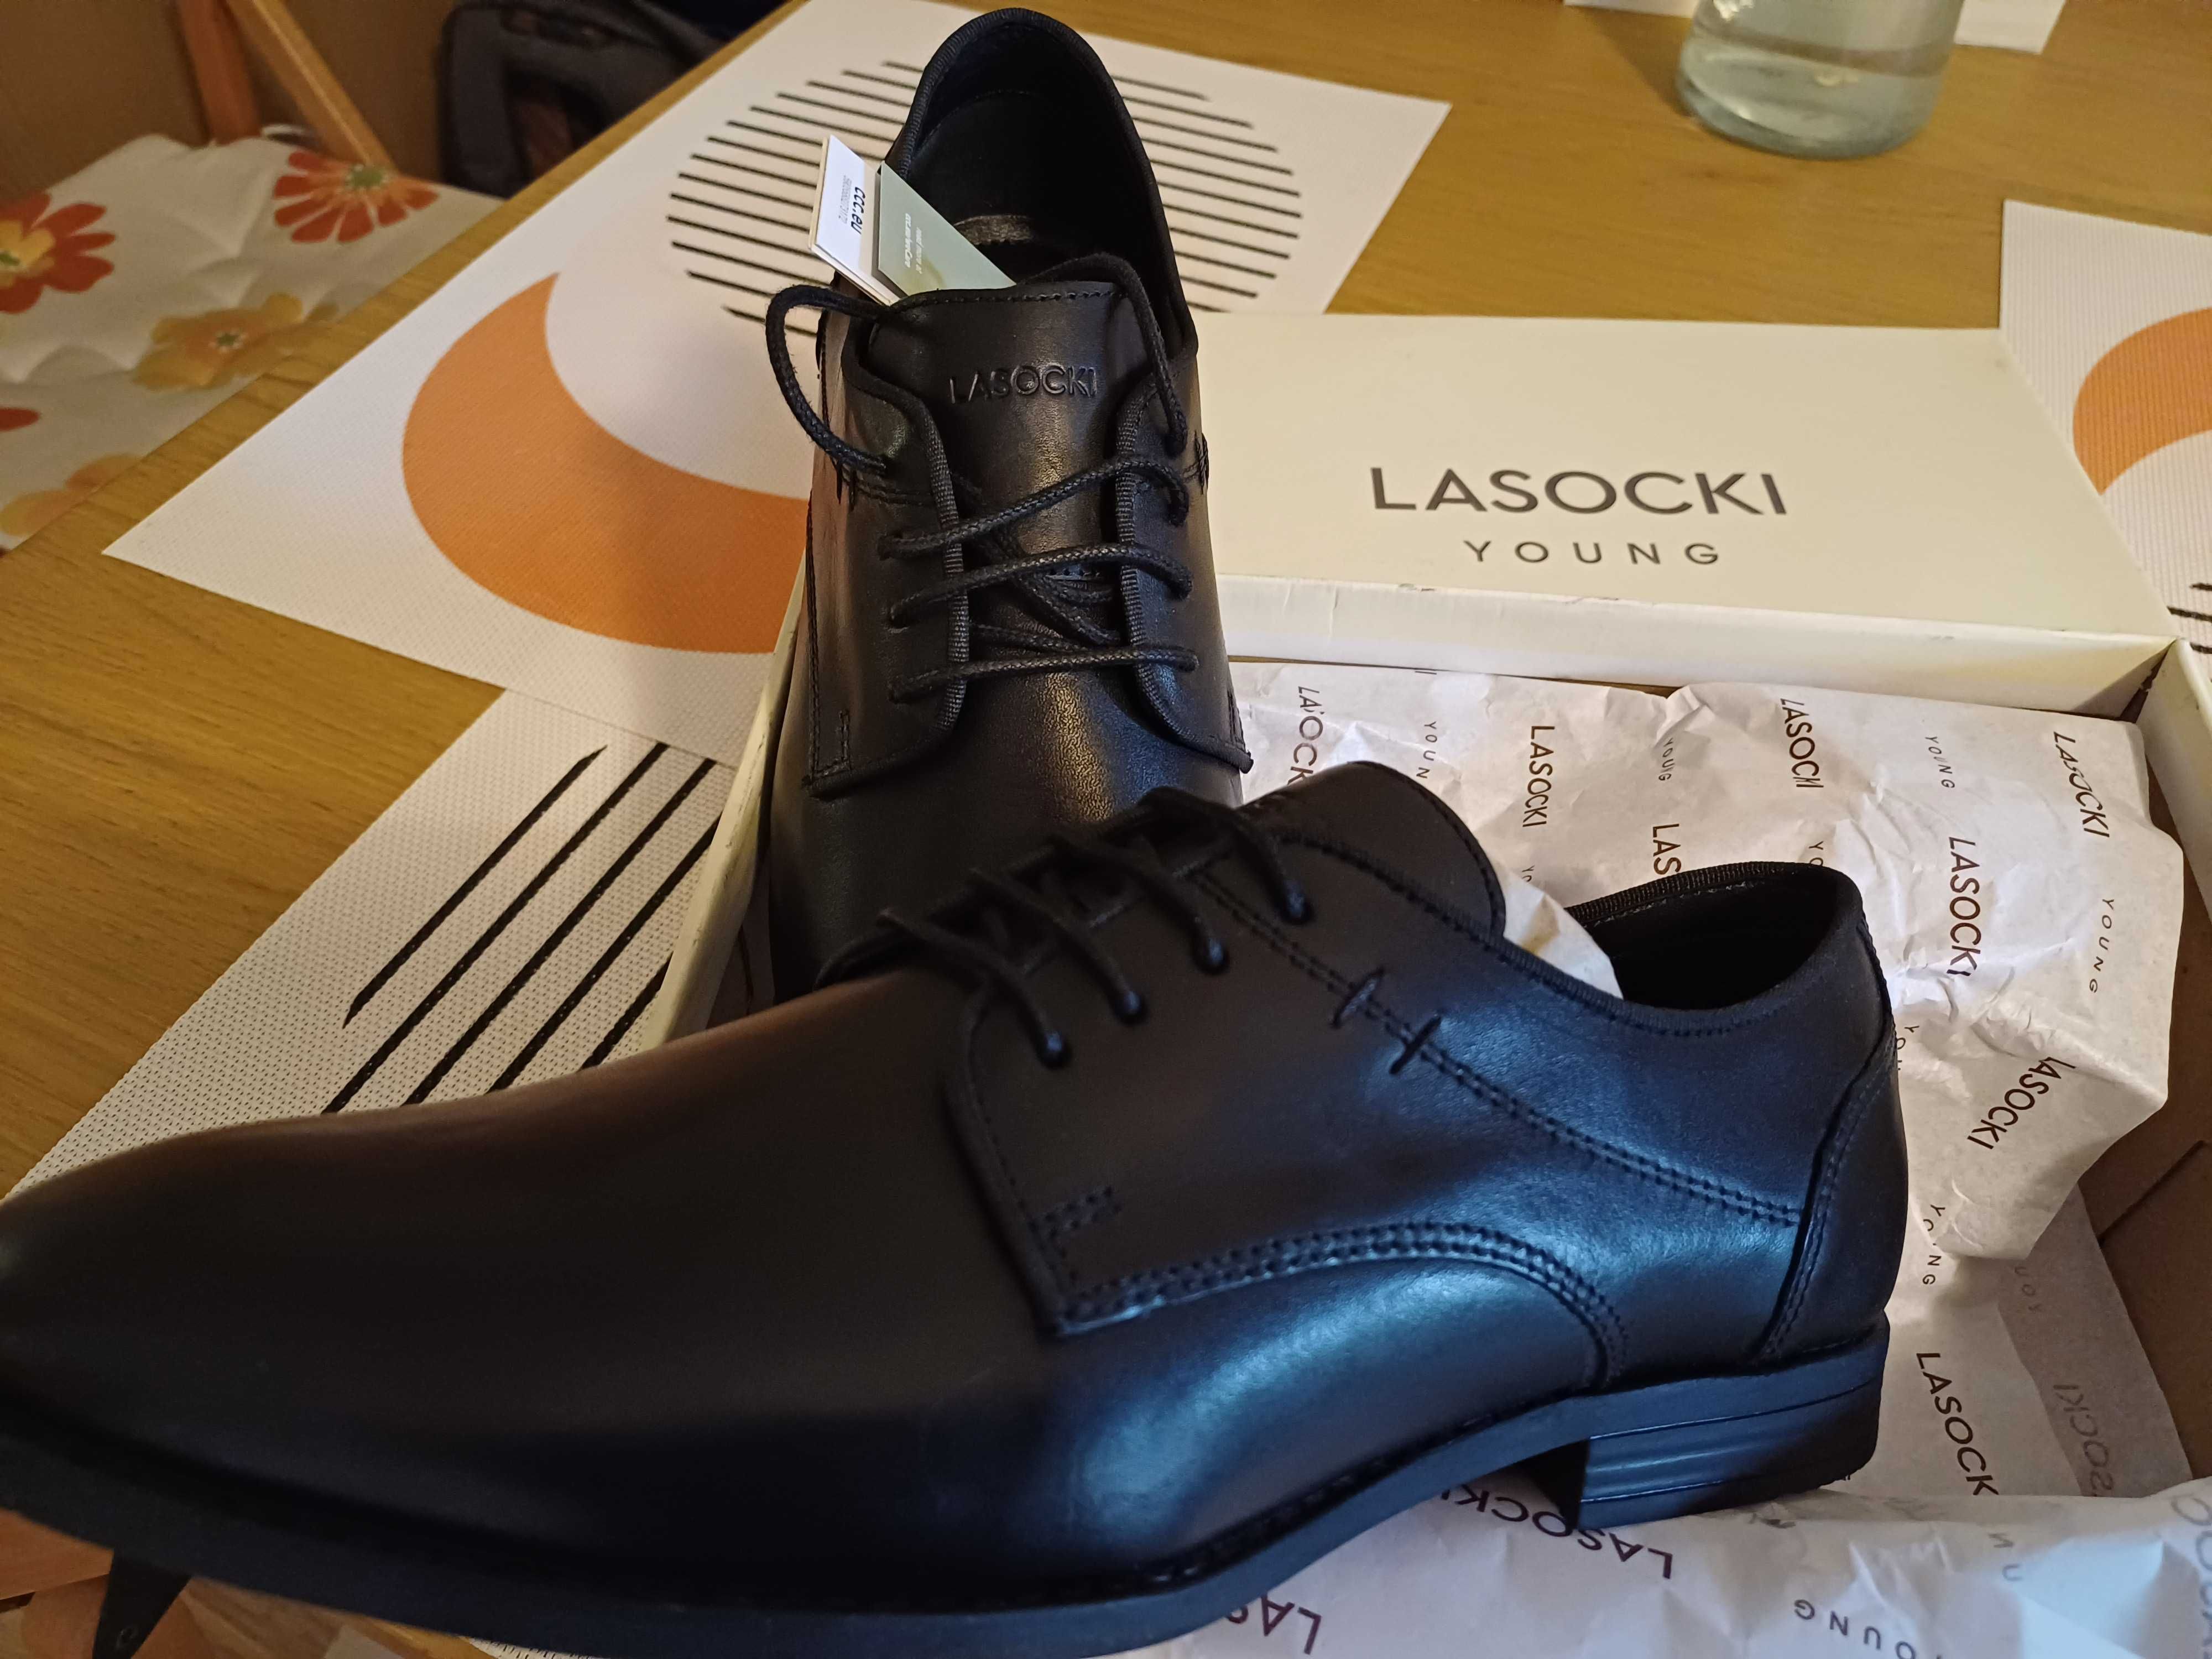 Buty Lasocki - nowe!